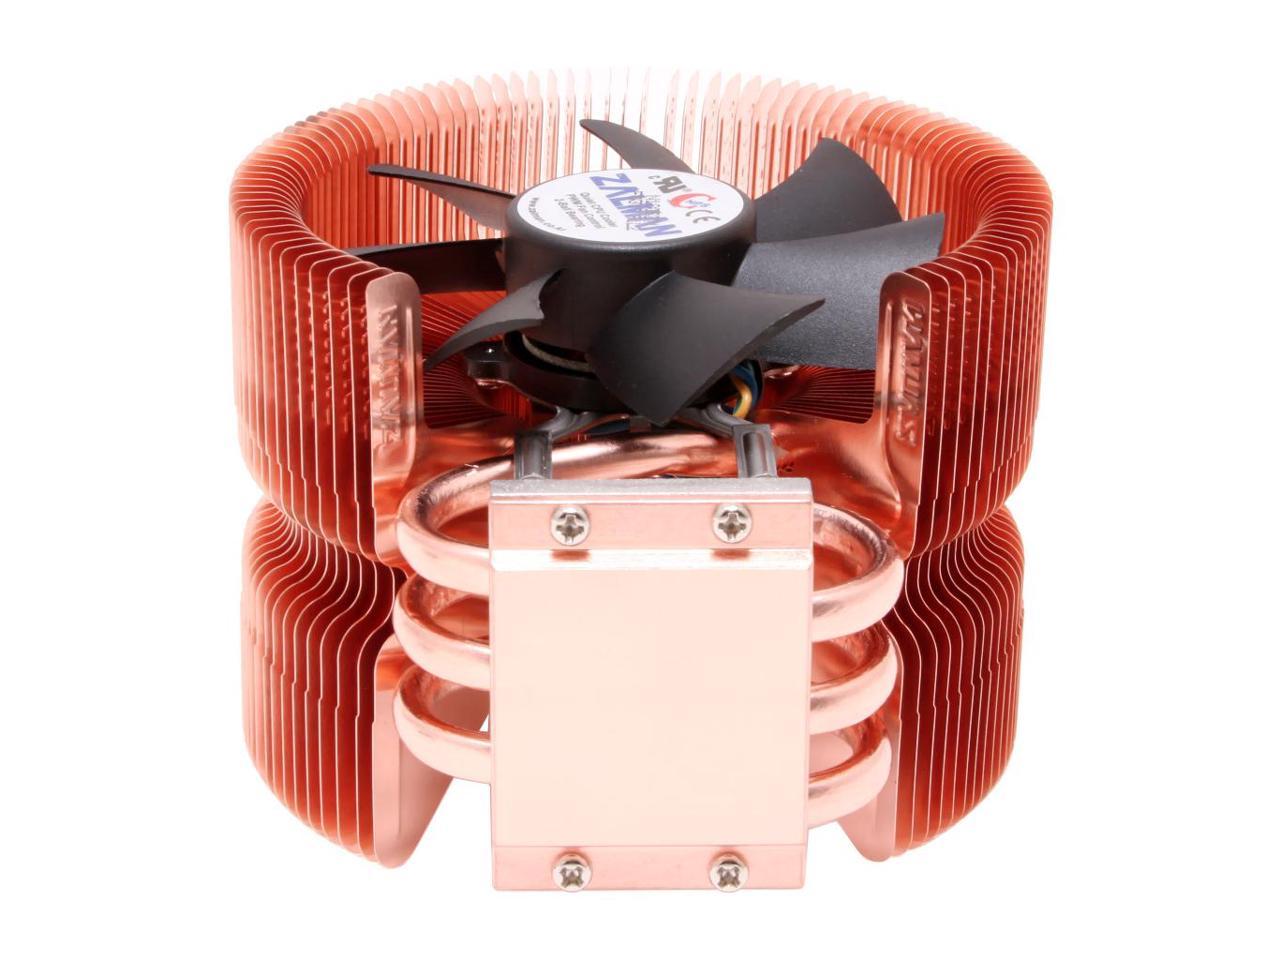 ZALMAN CNPS9500 AT 2 Ball CPU Cooling Fan/Heatsink - Newegg.com